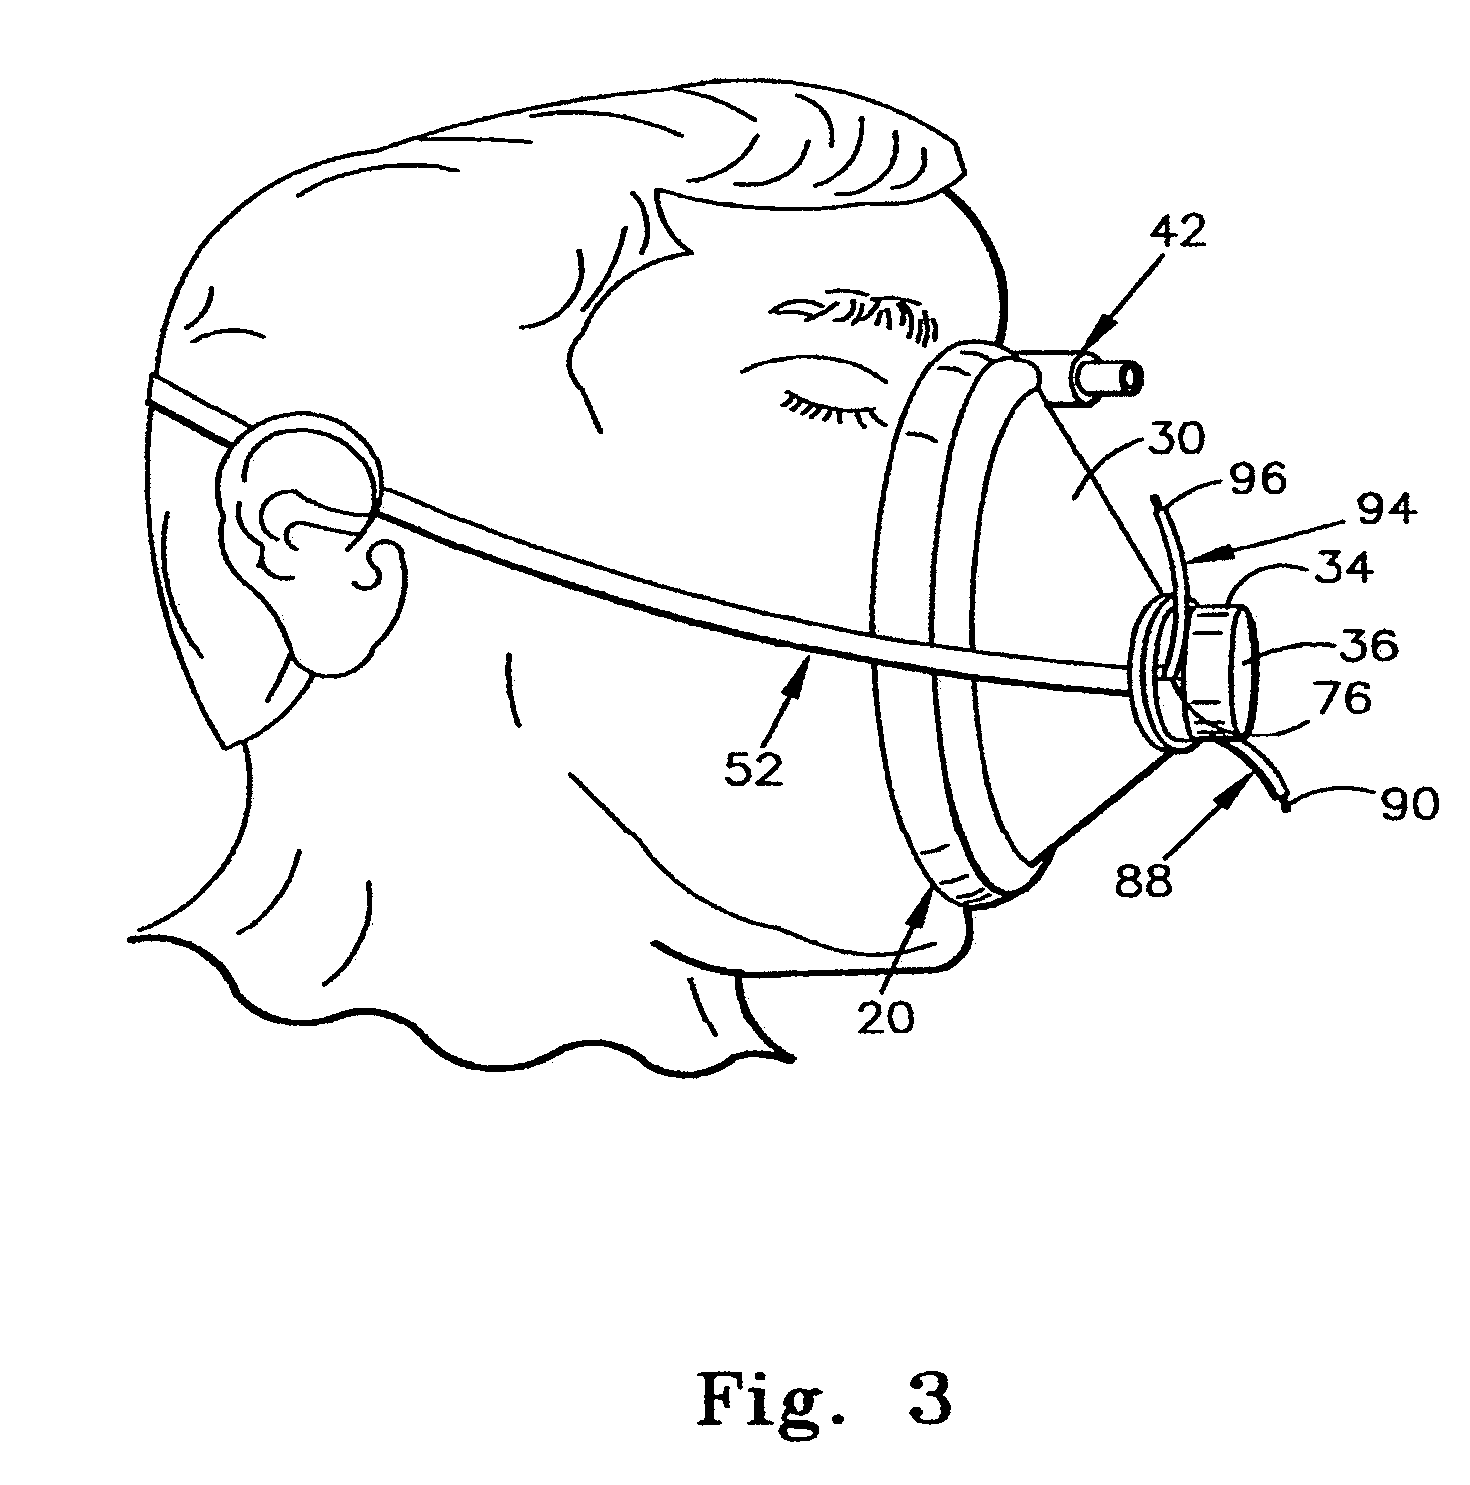 Face mask strap system